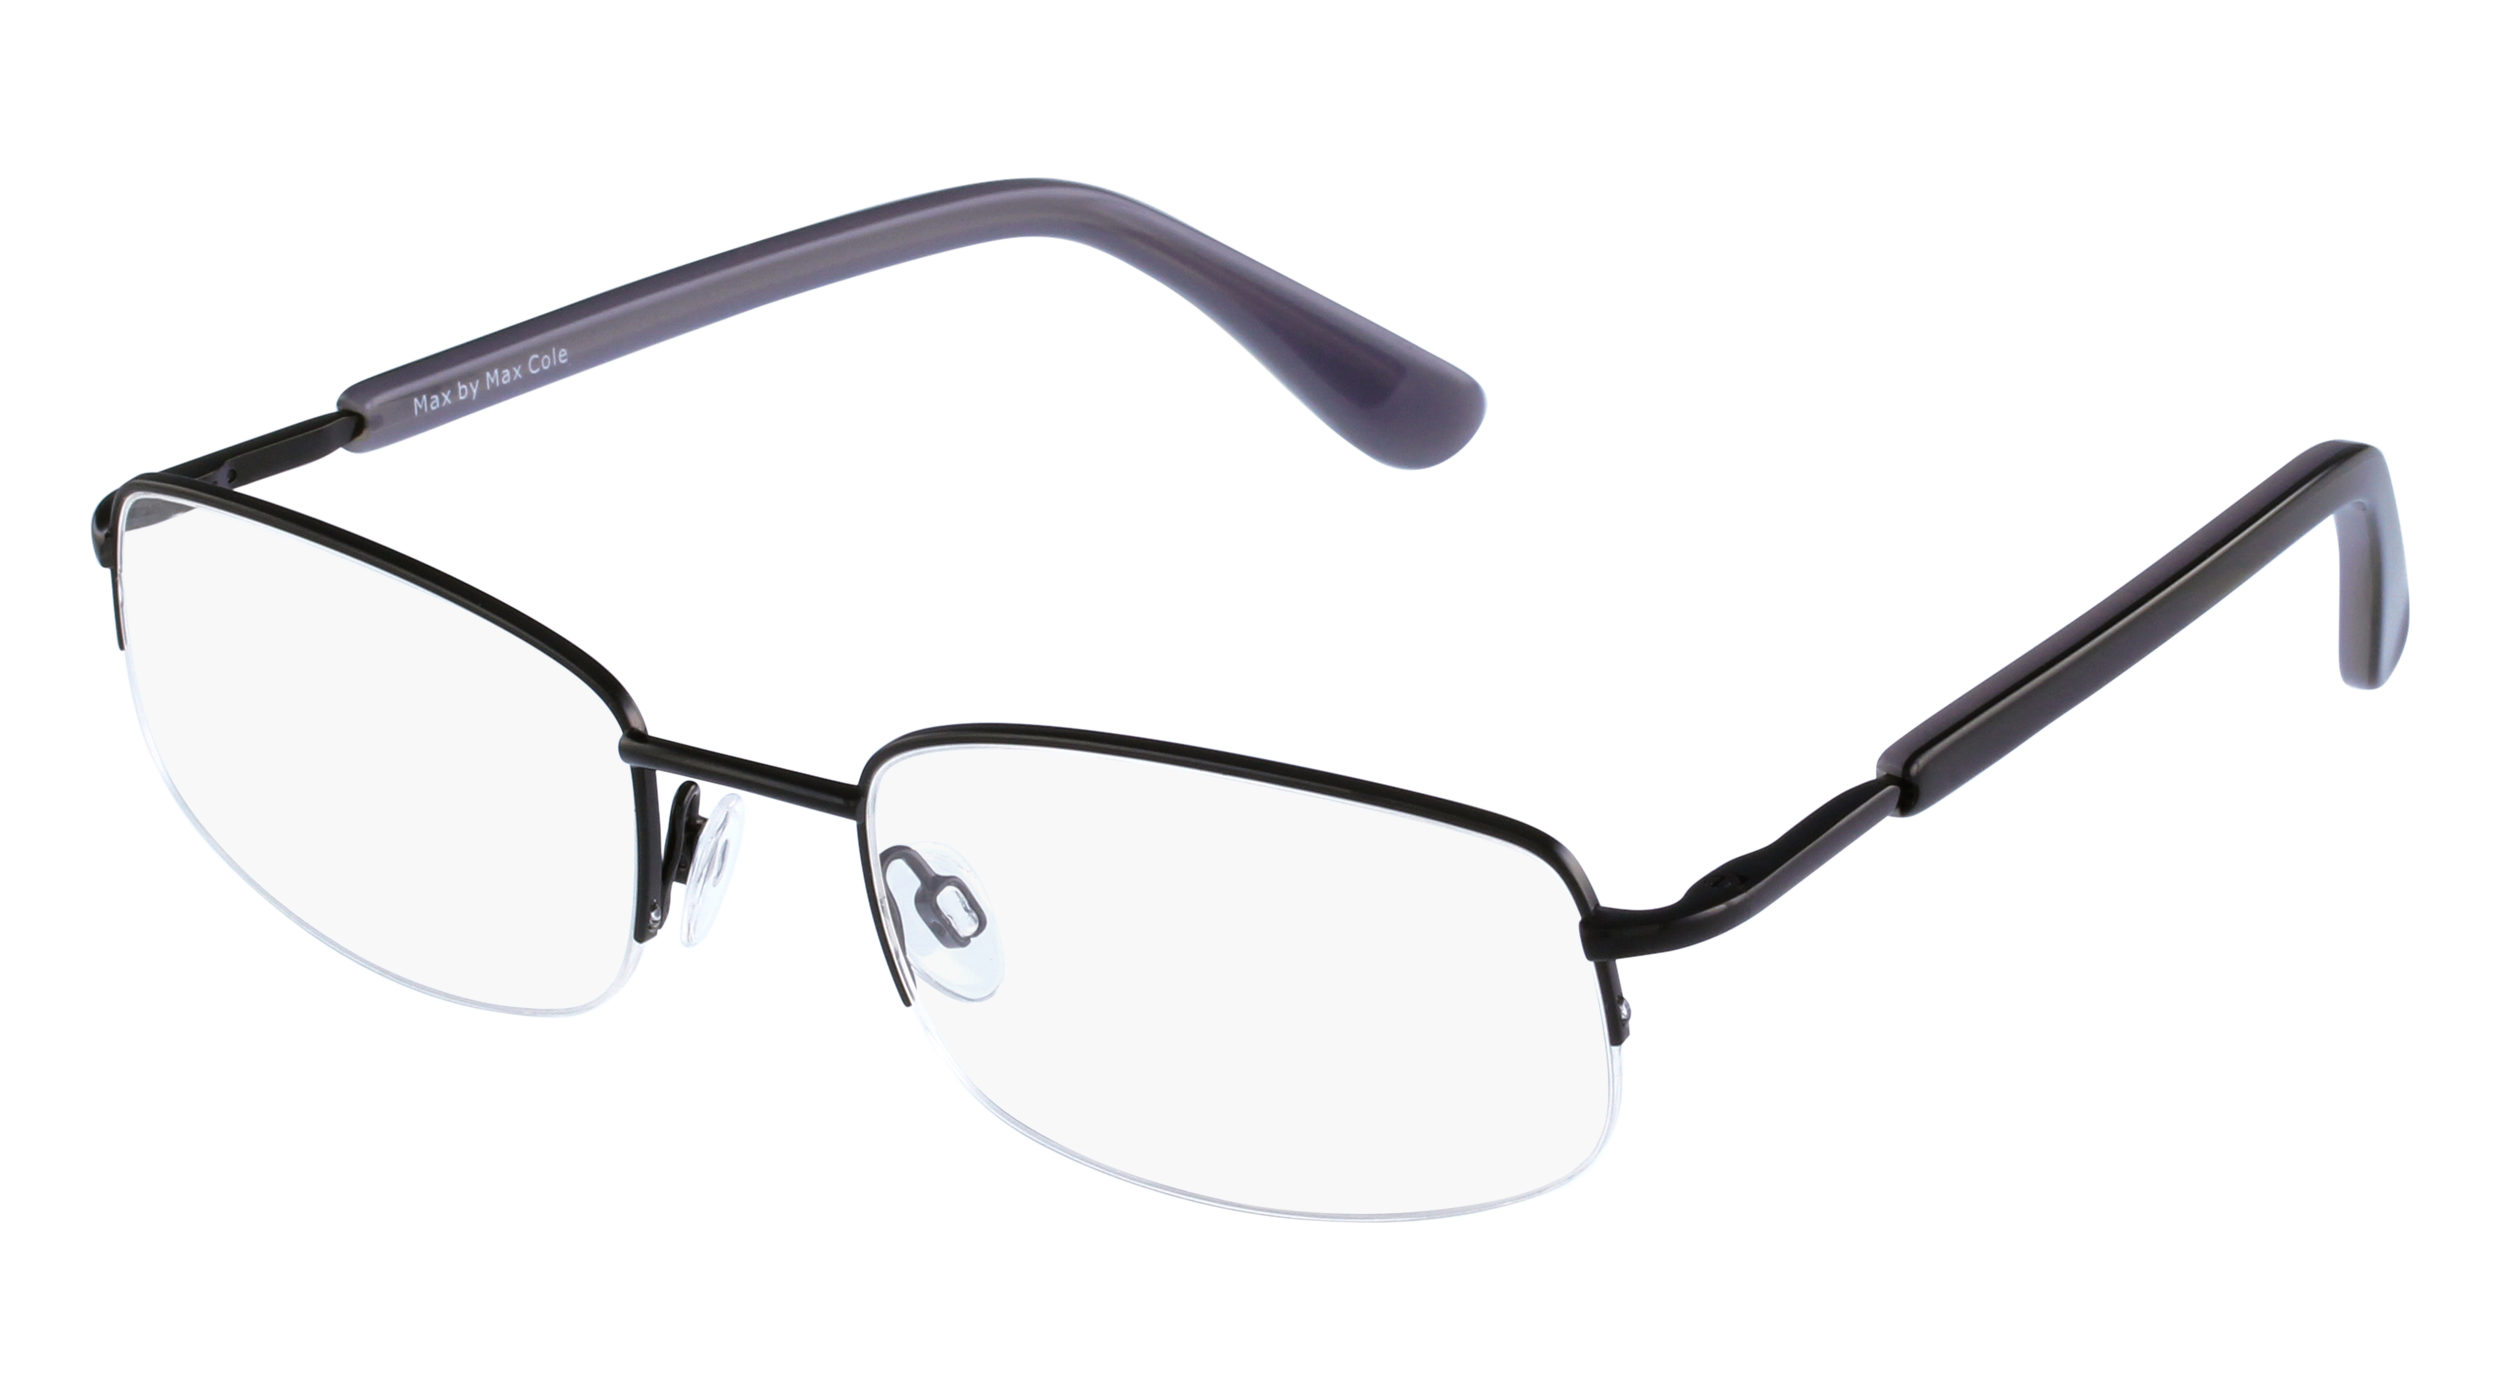 Eyeglass Sunglasses Eyewear Lens Prescription Glasses Clipart